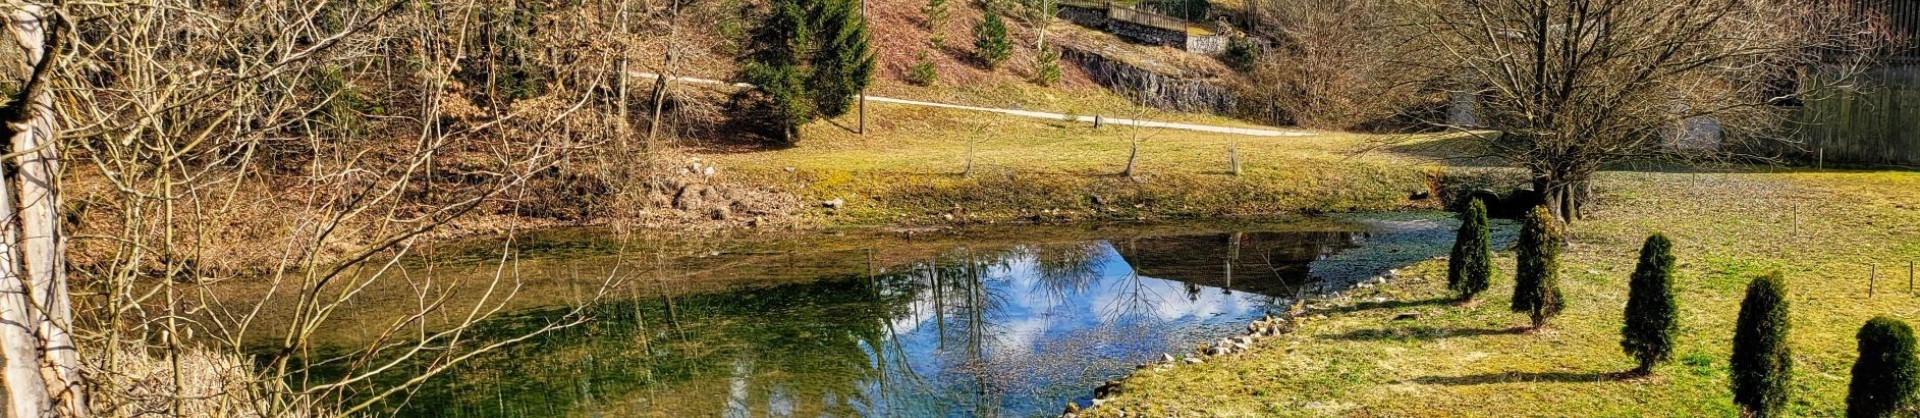 Gabrovcec dolenjska jezero slovenska jezera moja jezera manca korelc 1 sl